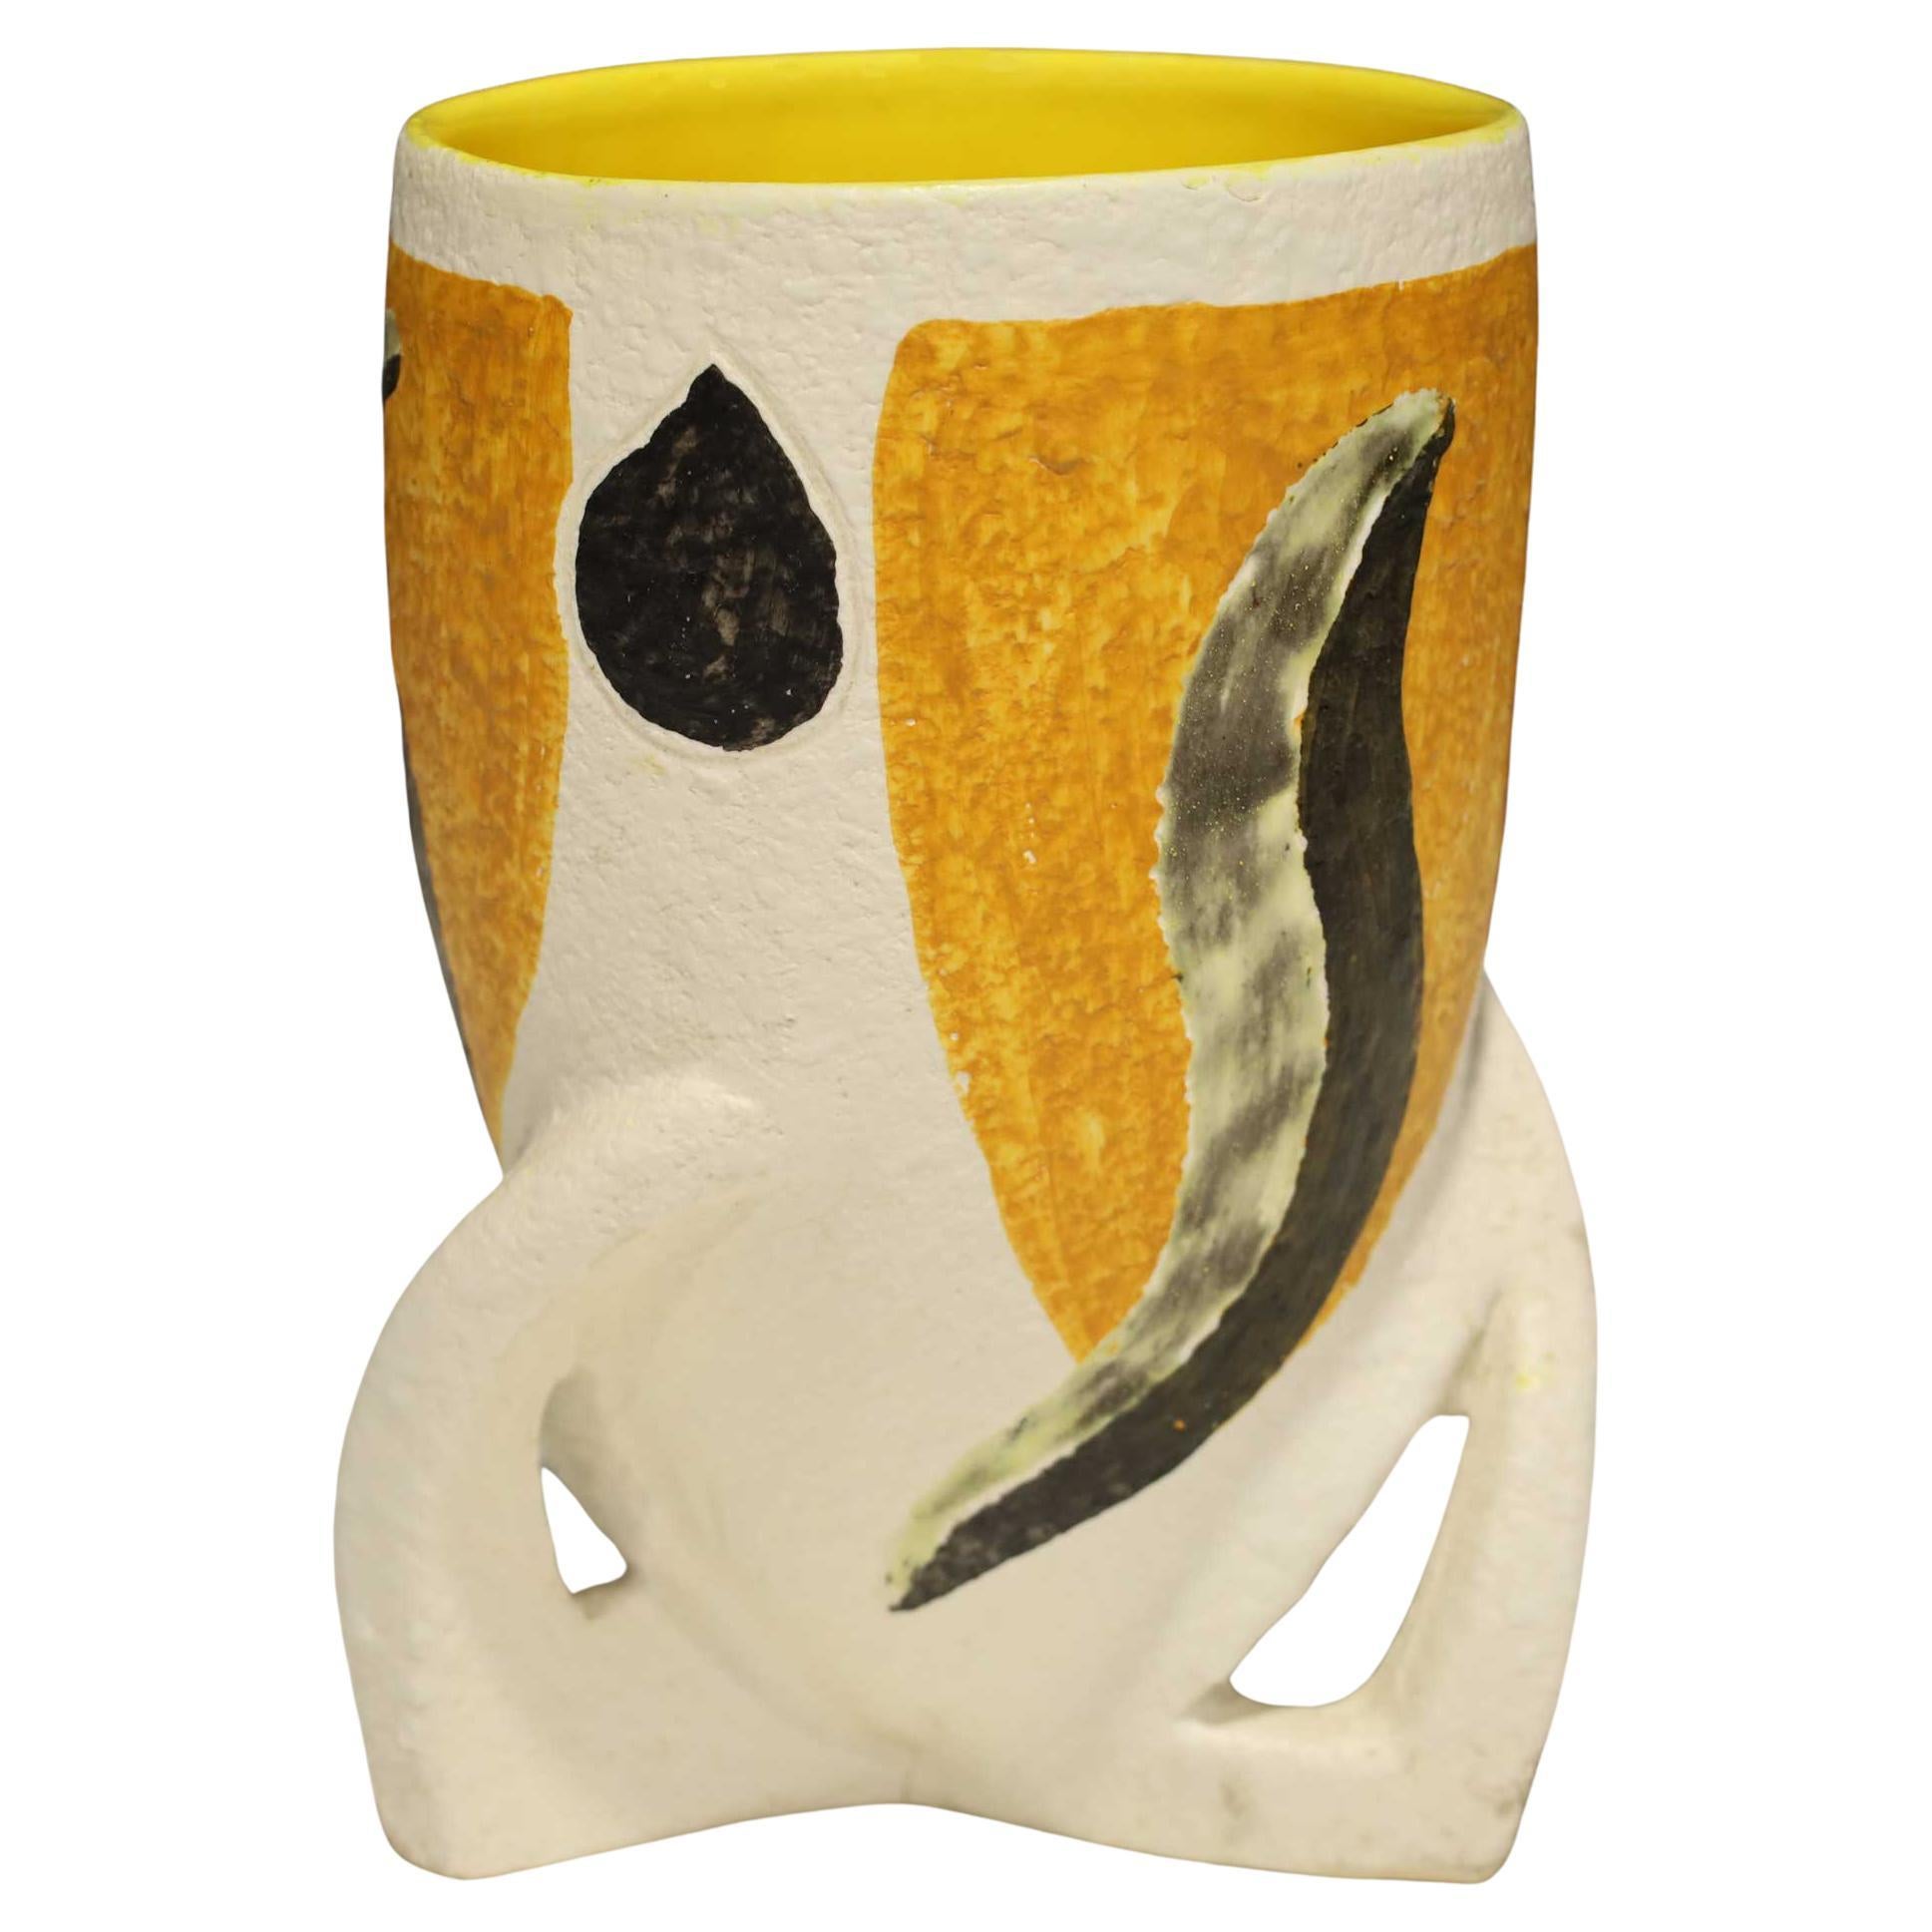 Giacomo Balla Attributed Vase in Yellow, Black and White